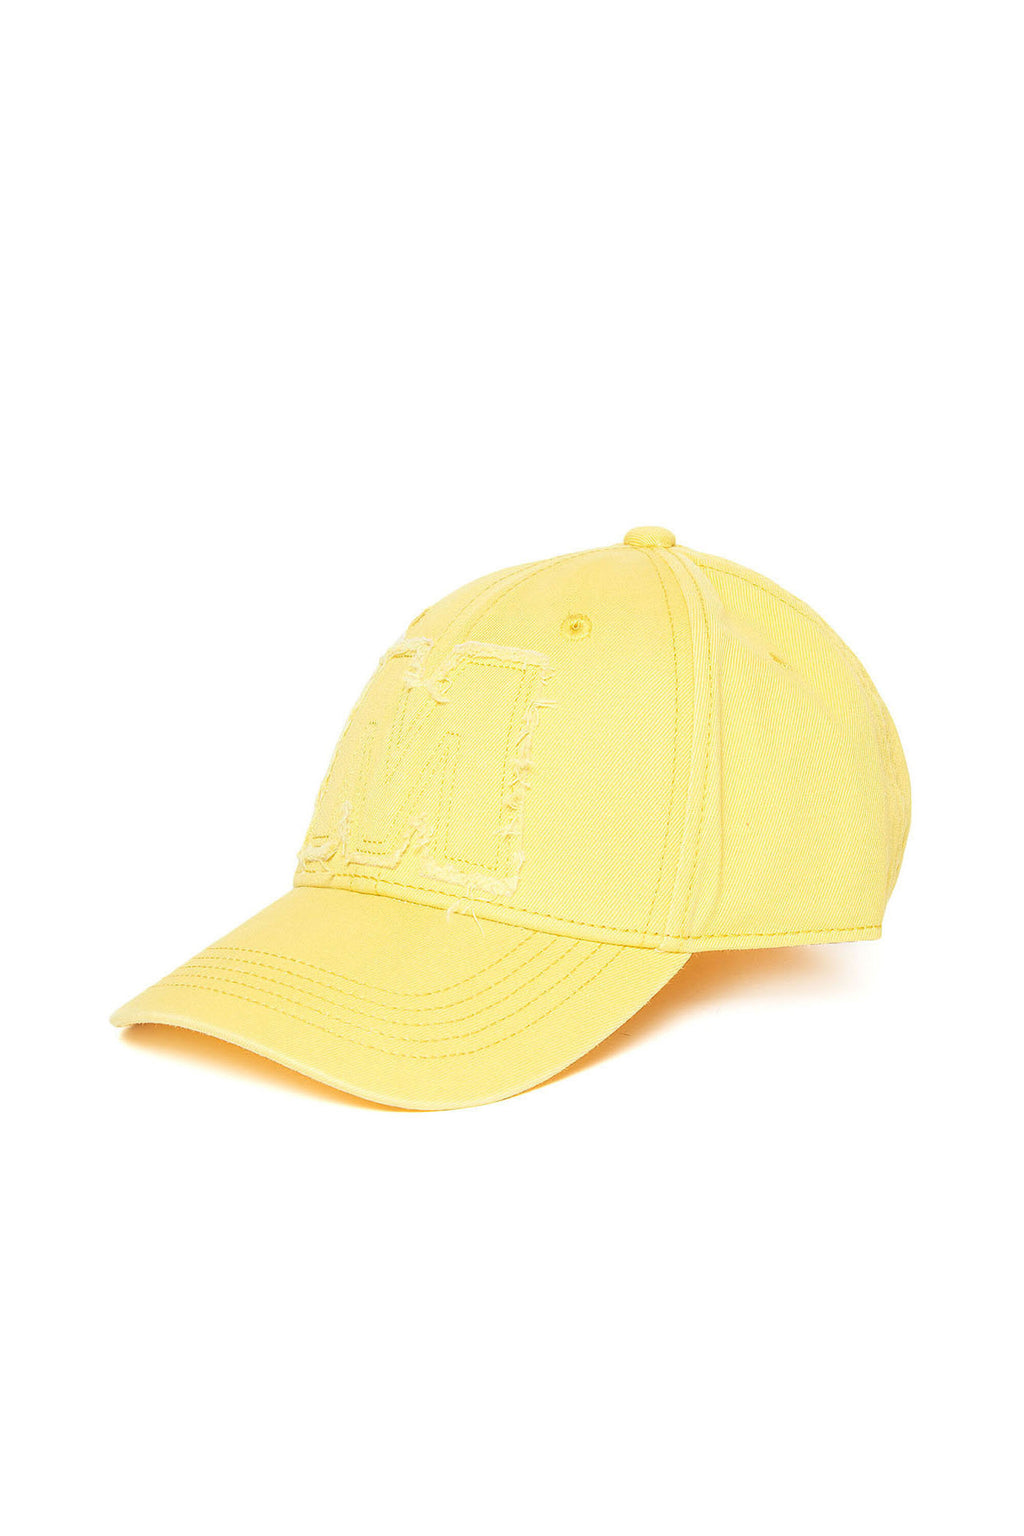 Yellow baseball cap with Big M logo